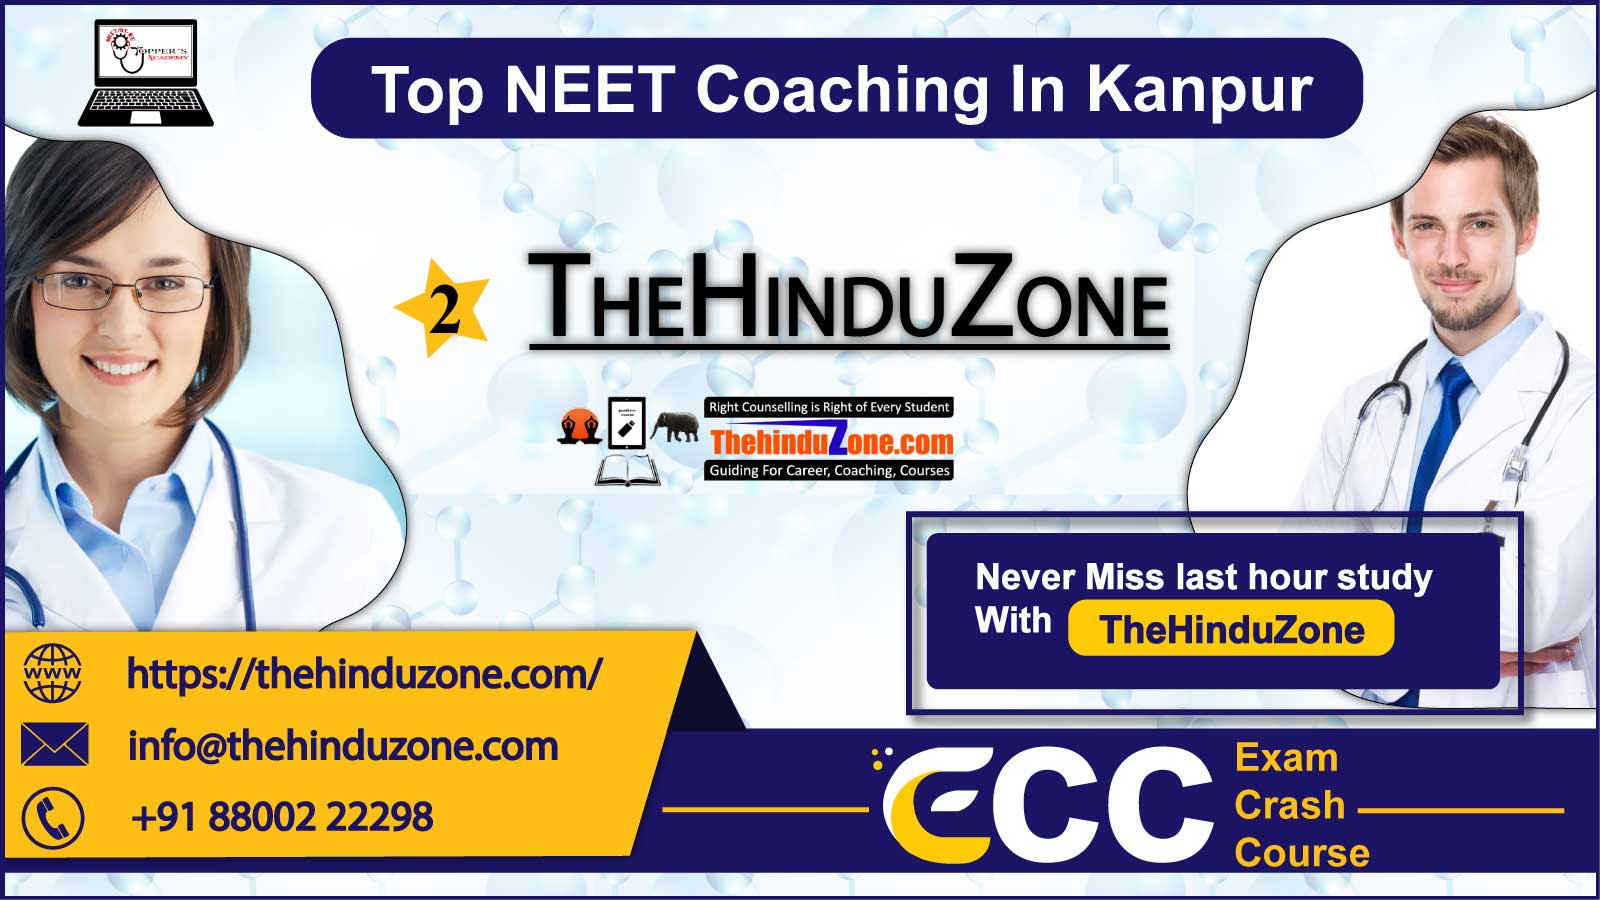 TheHinduzone NEET Coaching In Kanpur